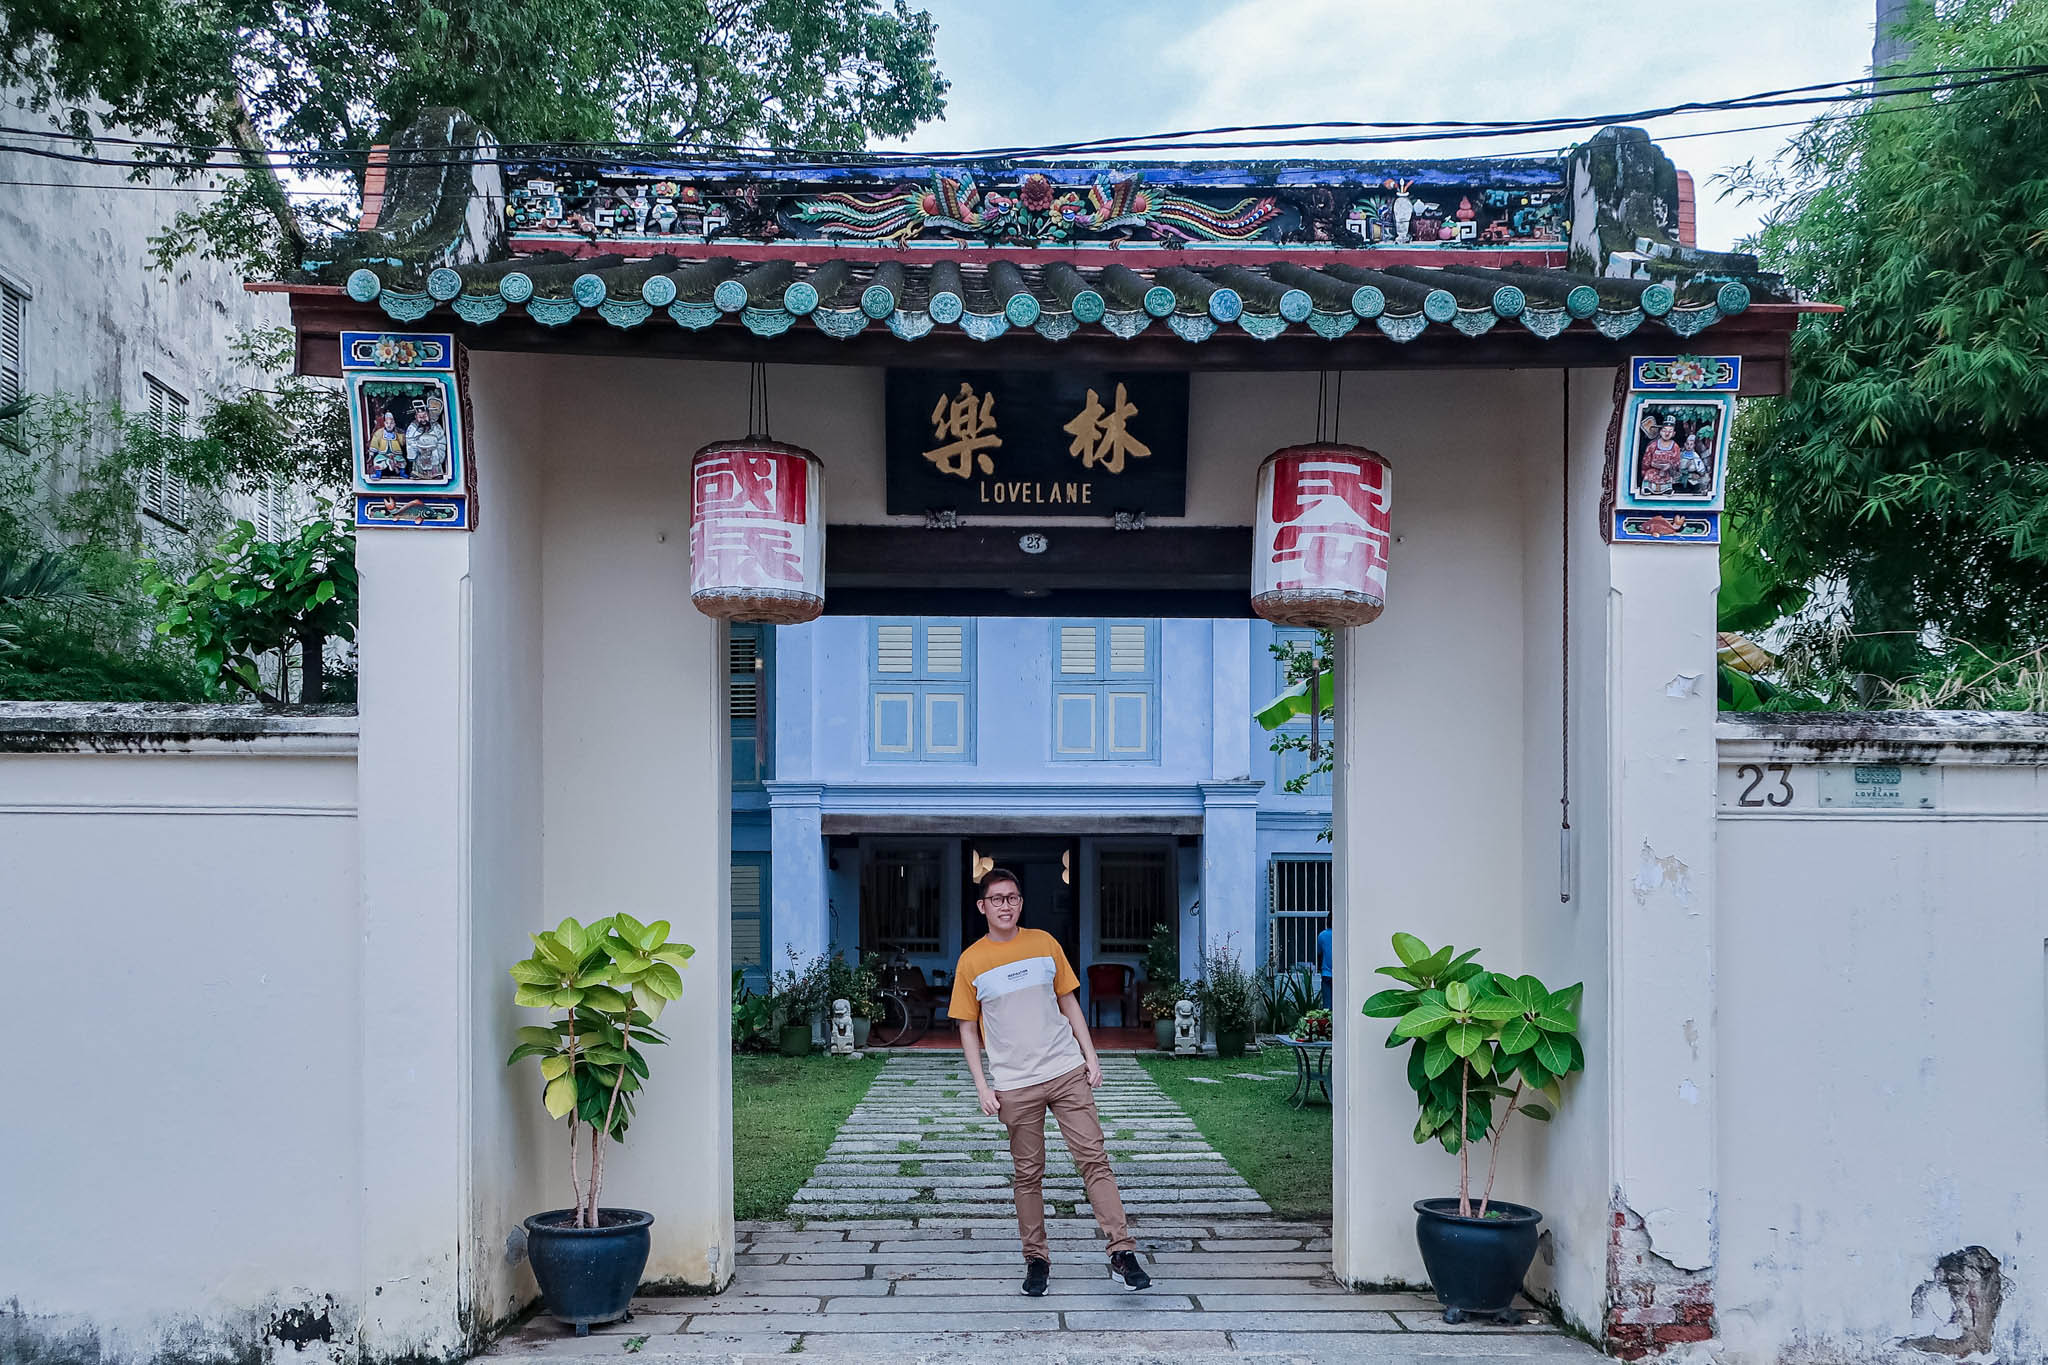 23 Lovelane Penang Hotel Review